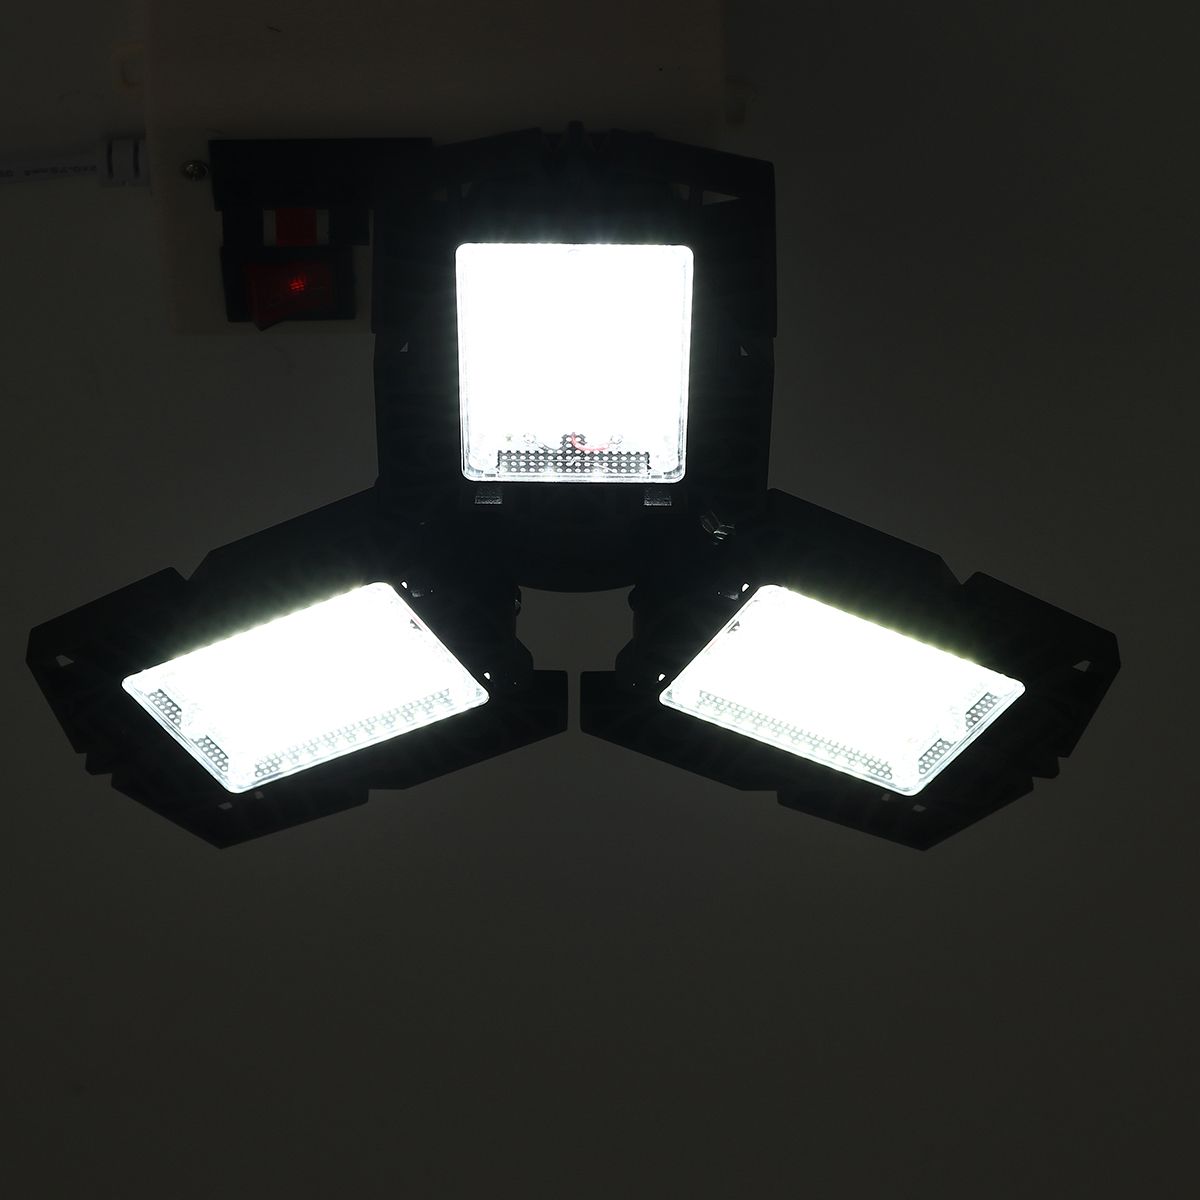 E27-60W-6000LM-LED-Garage-Light-Foldable-Ceiling-Fixture-Workshop-Deformable-Lamp-AC85-265V-1696906